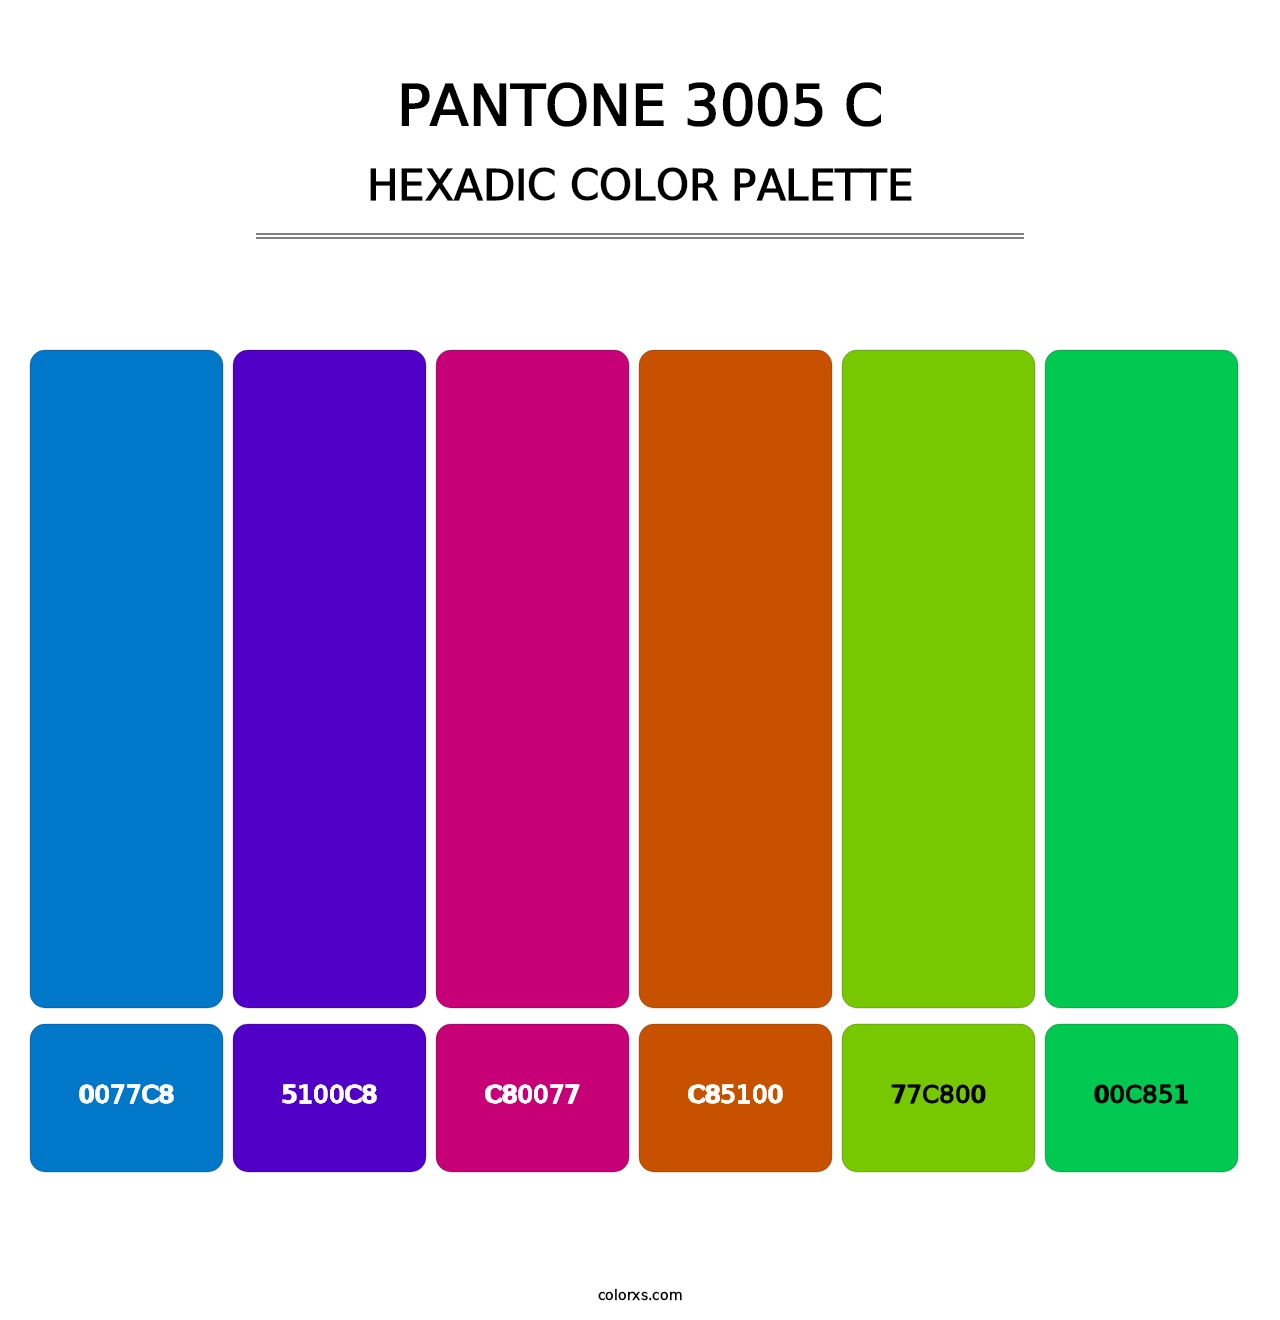 PANTONE 3005 C - Hexadic Color Palette